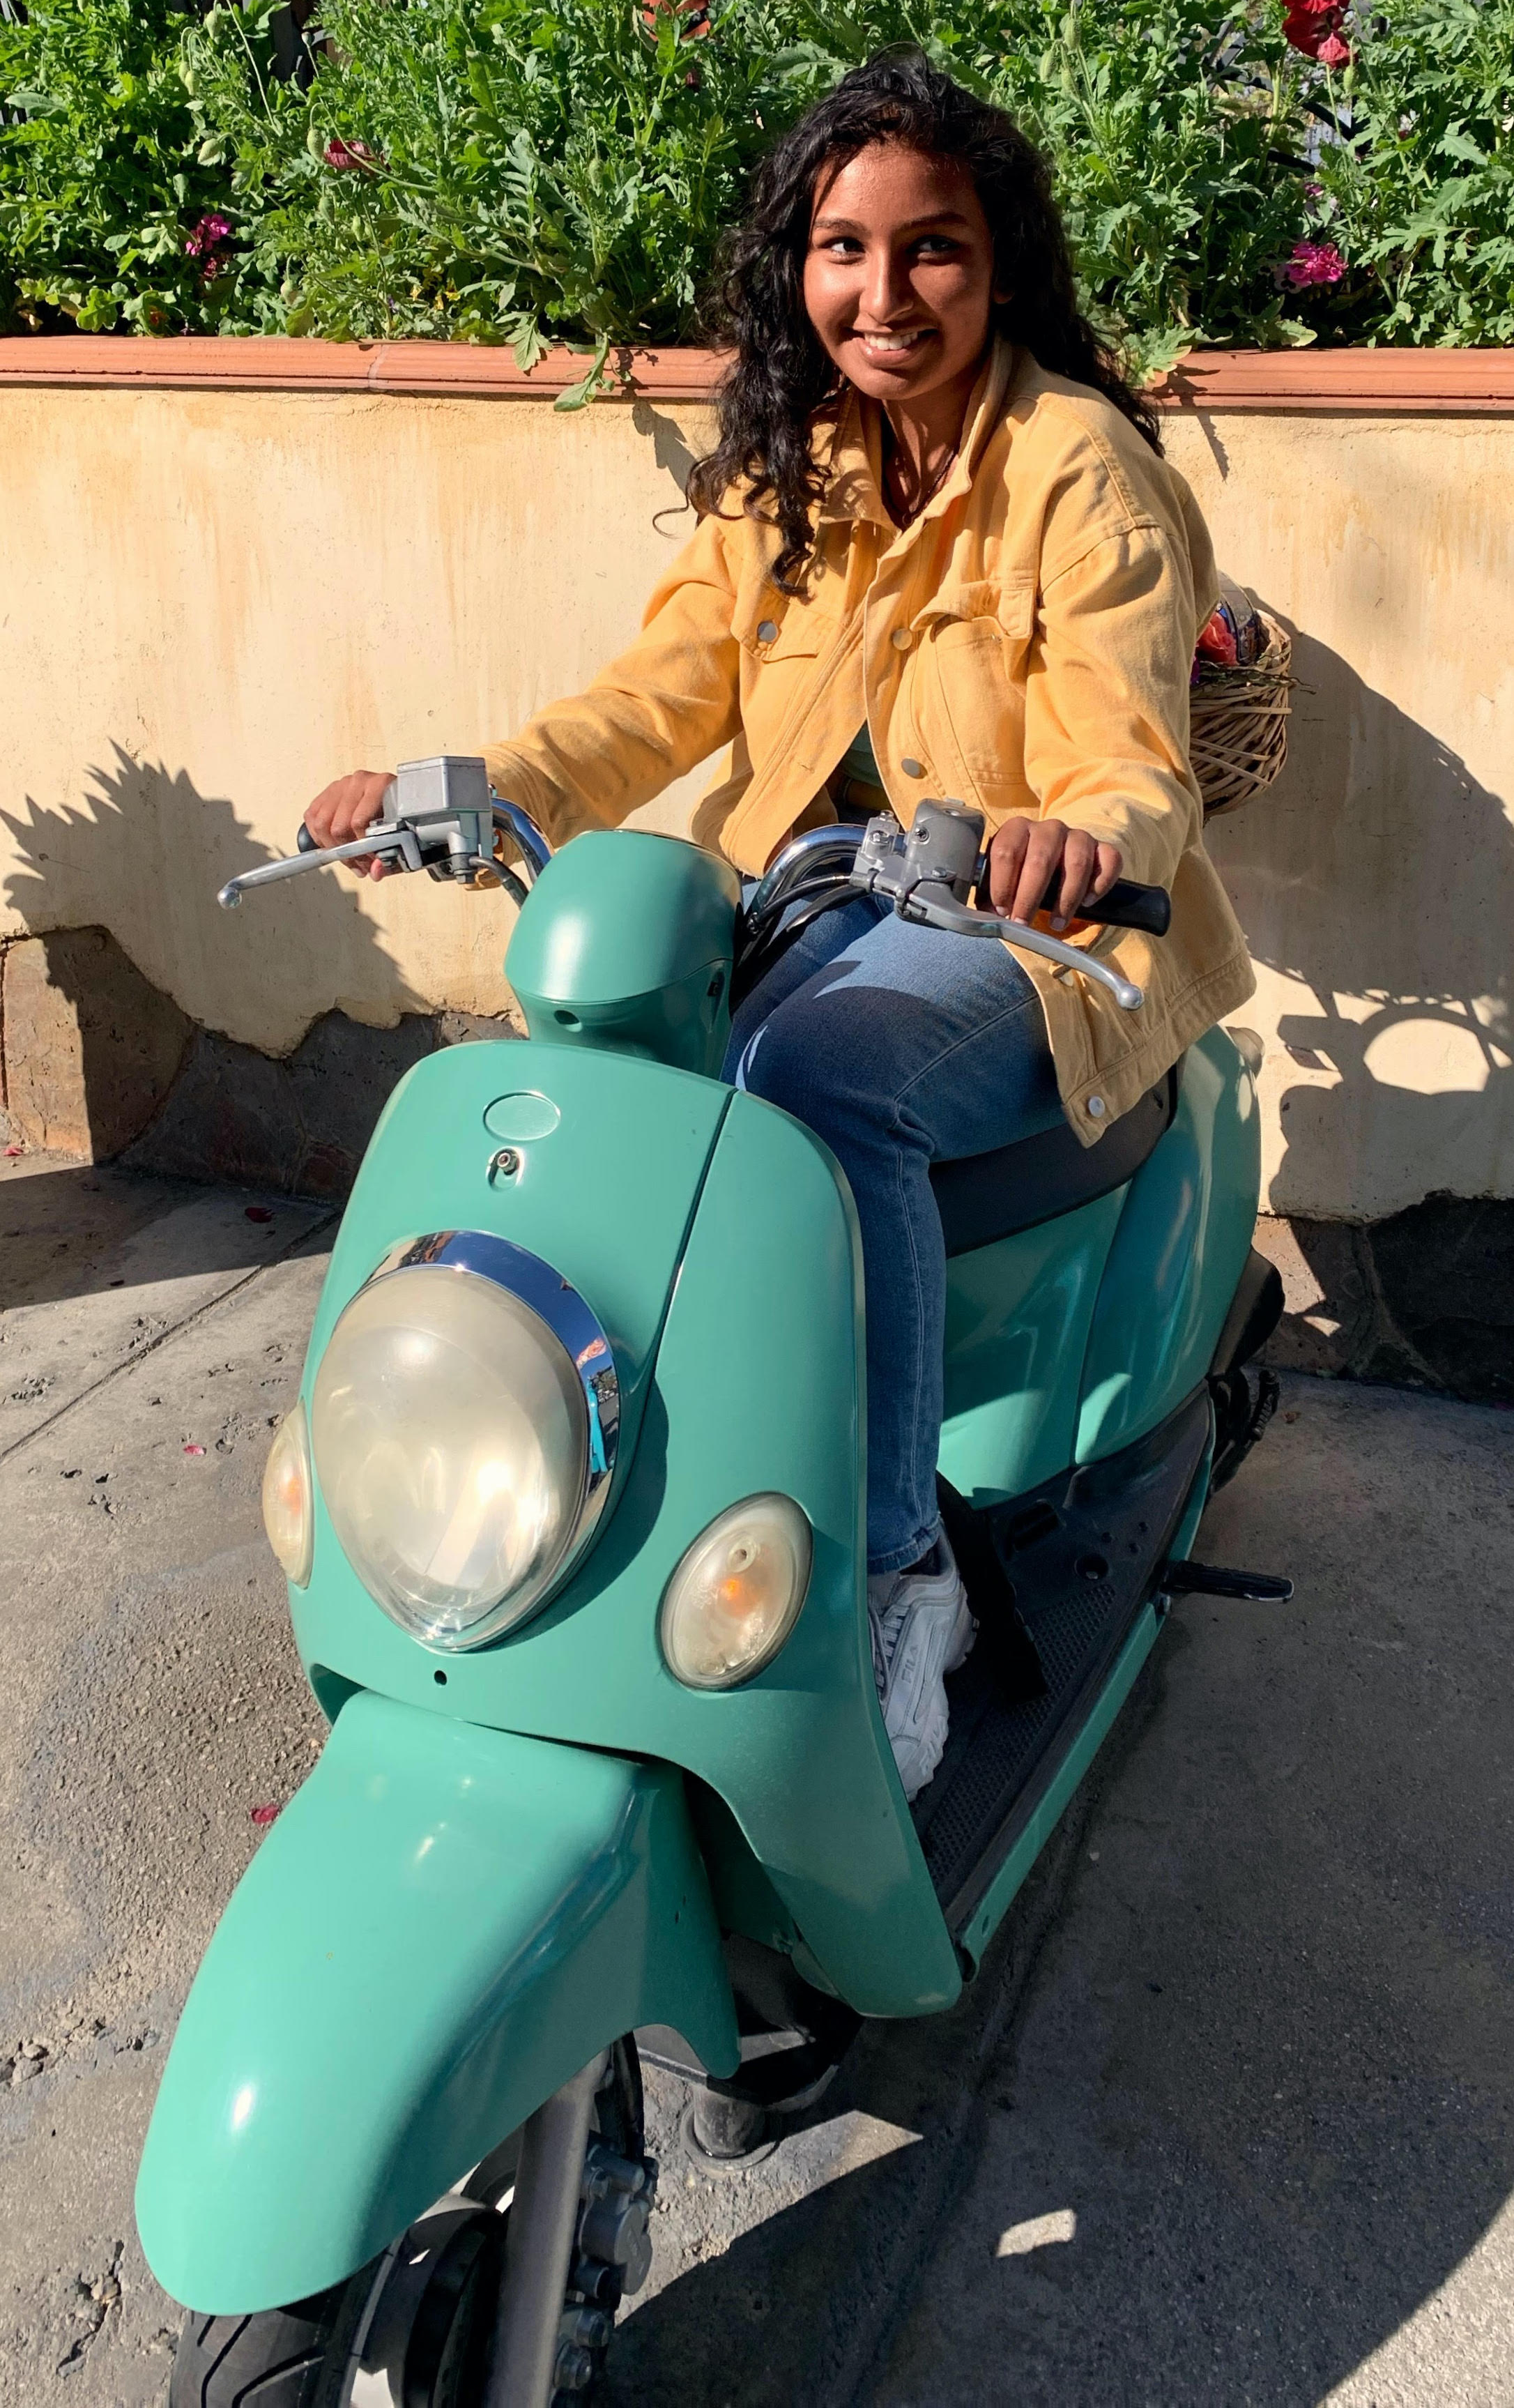 Naya Ramtahal sitting on a motorized scooter